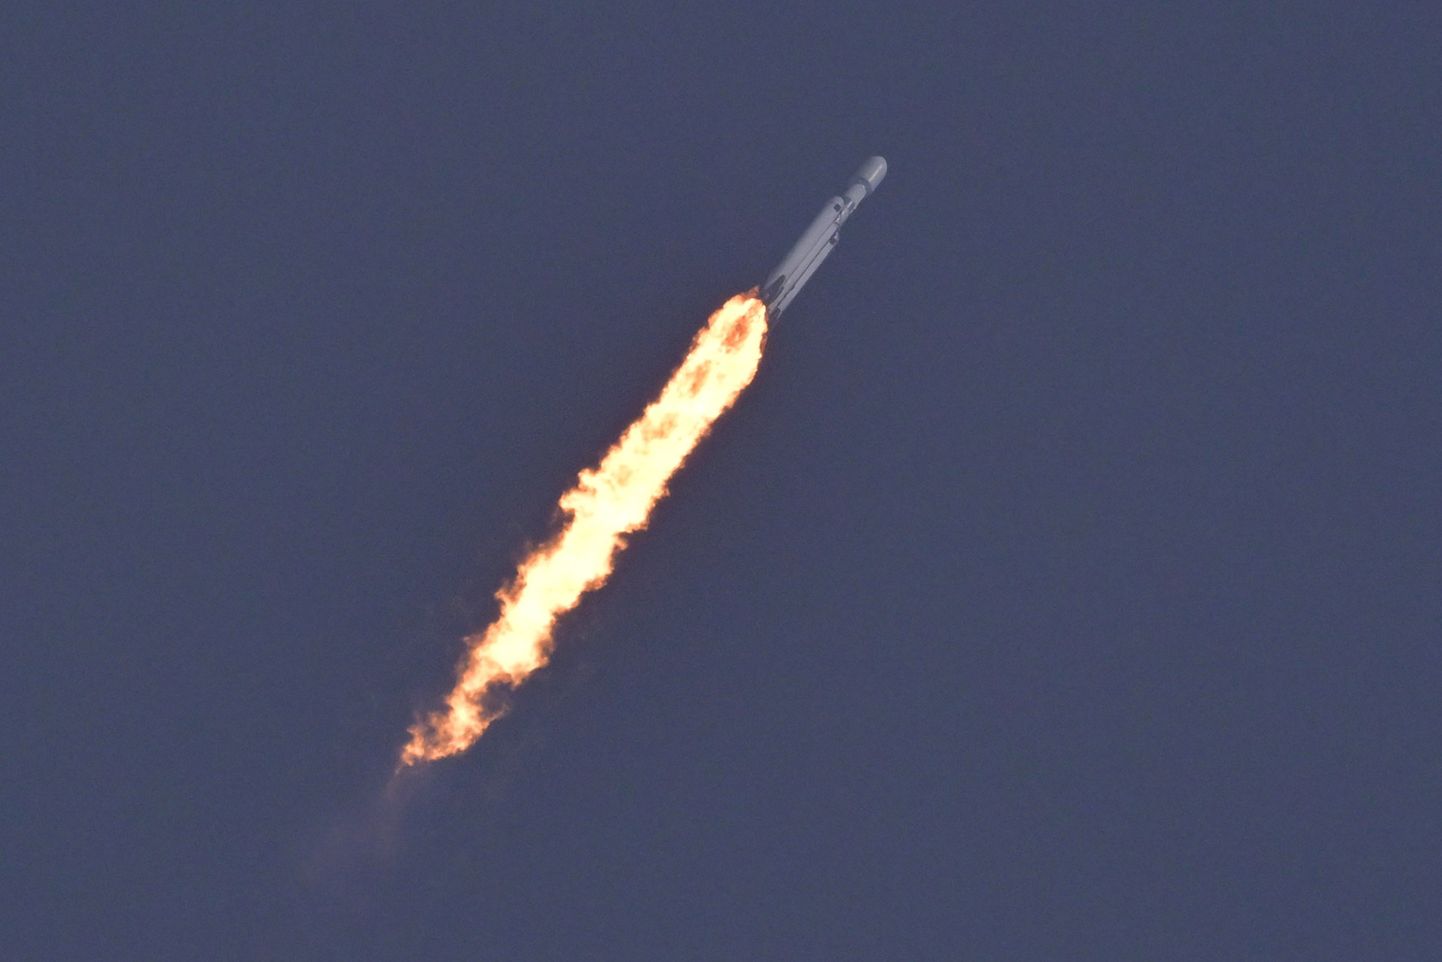 SpaceXi kanderakett Falcon Heavy lendamas kosmosesse 1. novembril 2022.